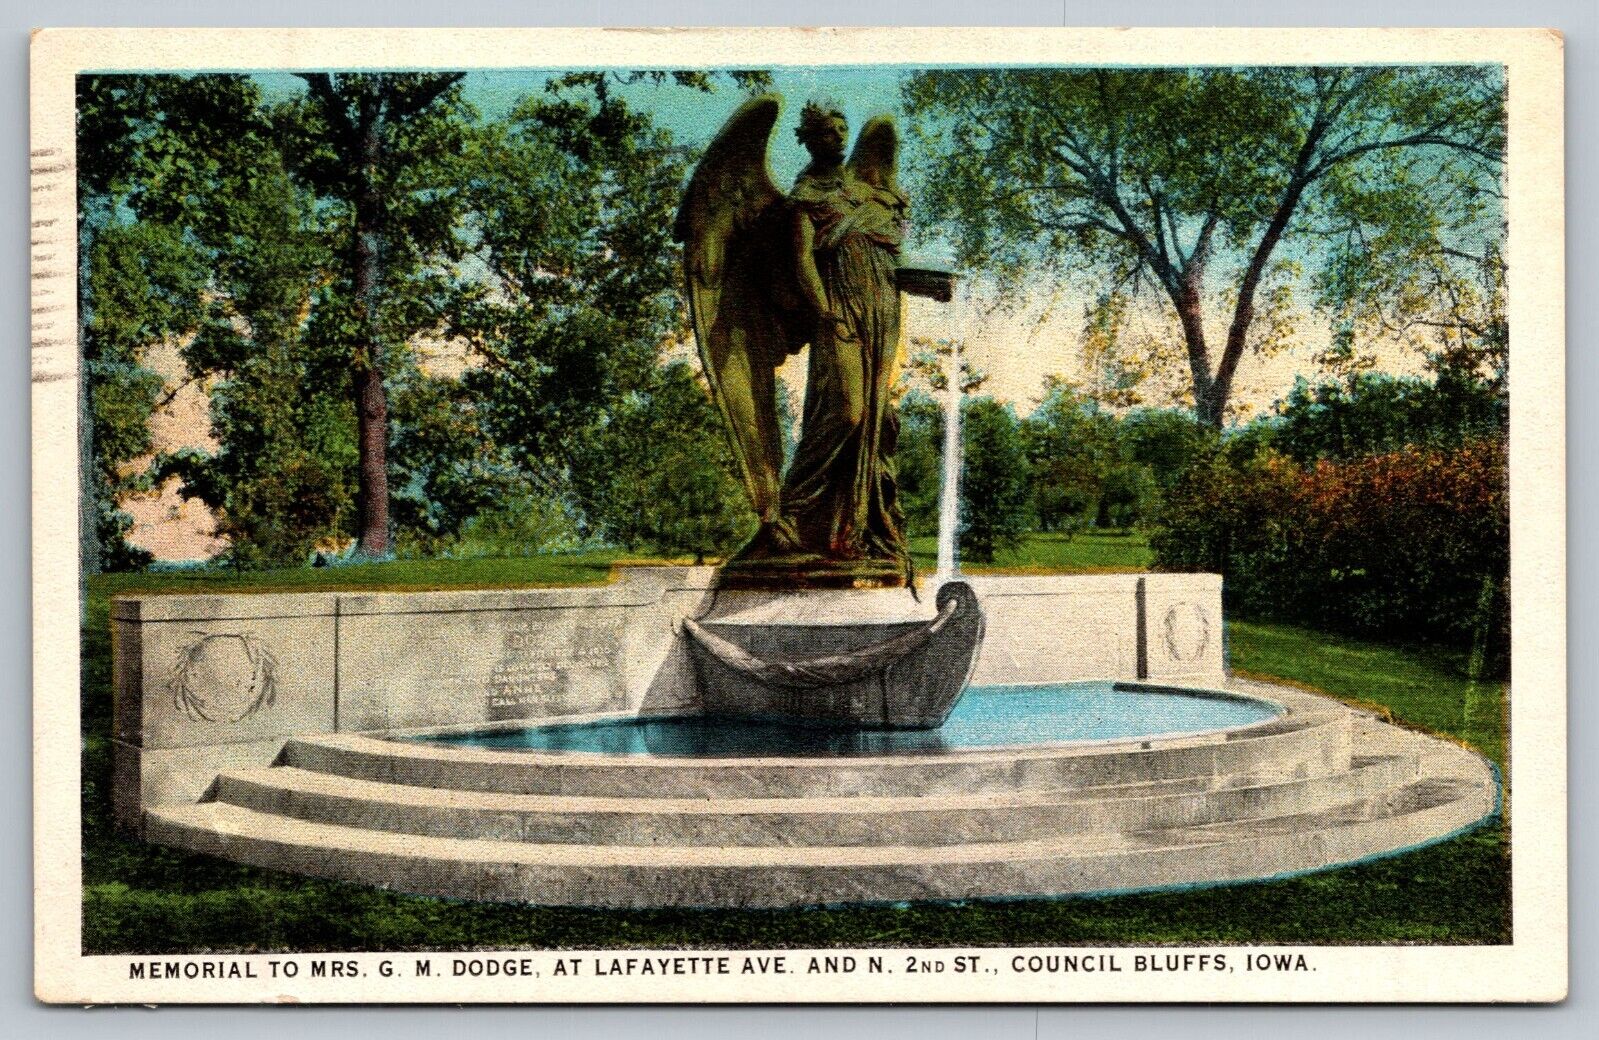 Council Bluffs, Iowa, Memorial to Mrs. G.M. Dodge at Lafayette